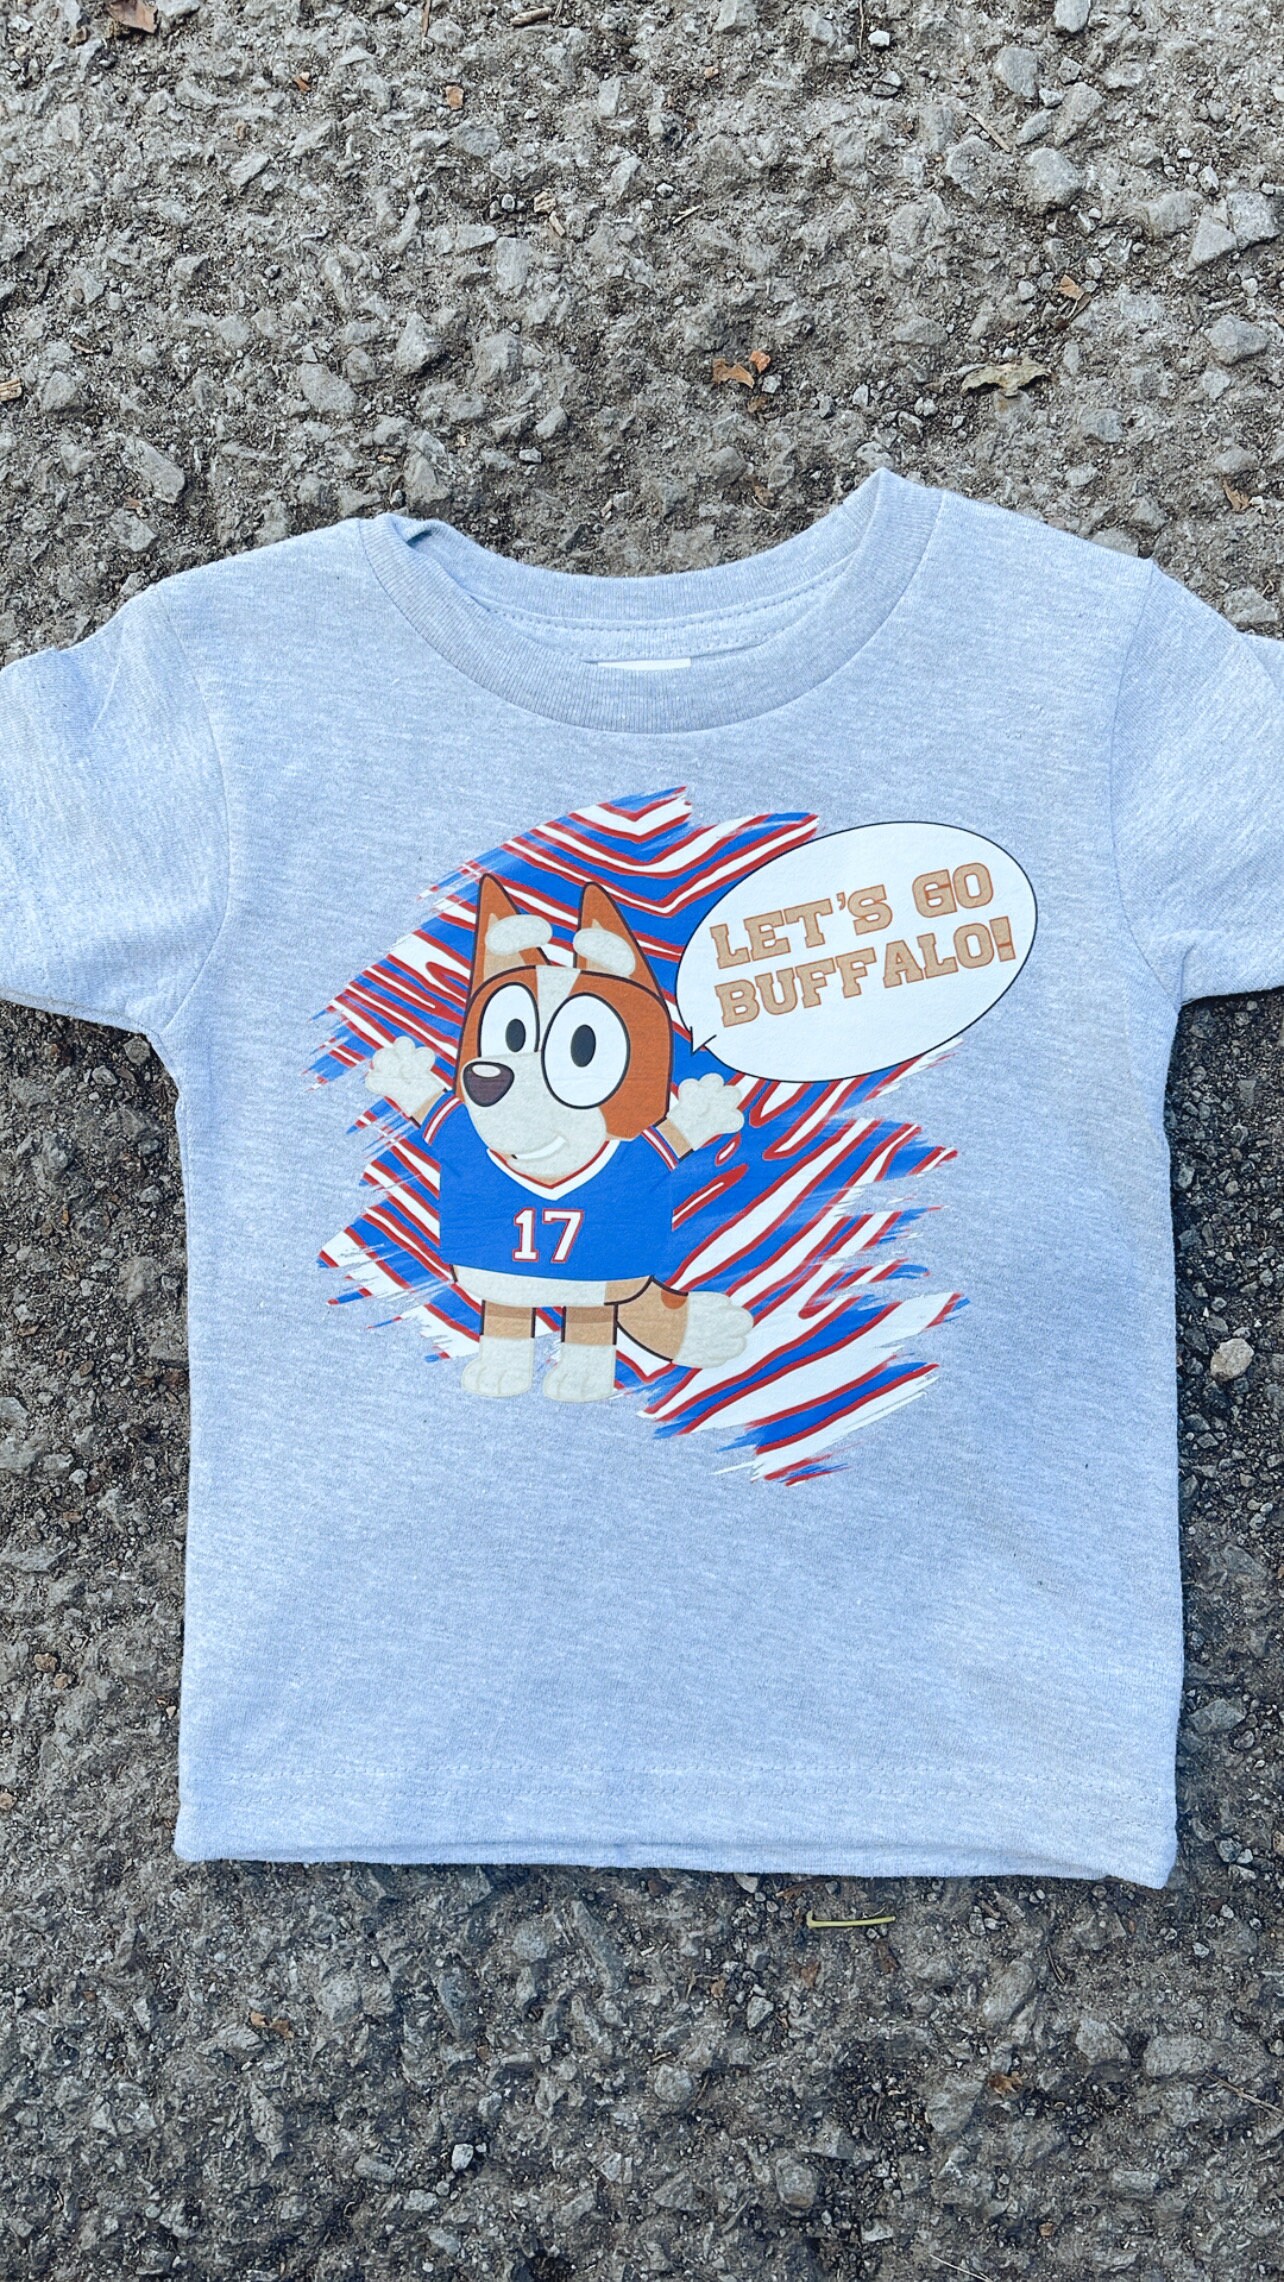 Buffalo Blue Jays Kids T-Shirt for Sale by DavidEarton